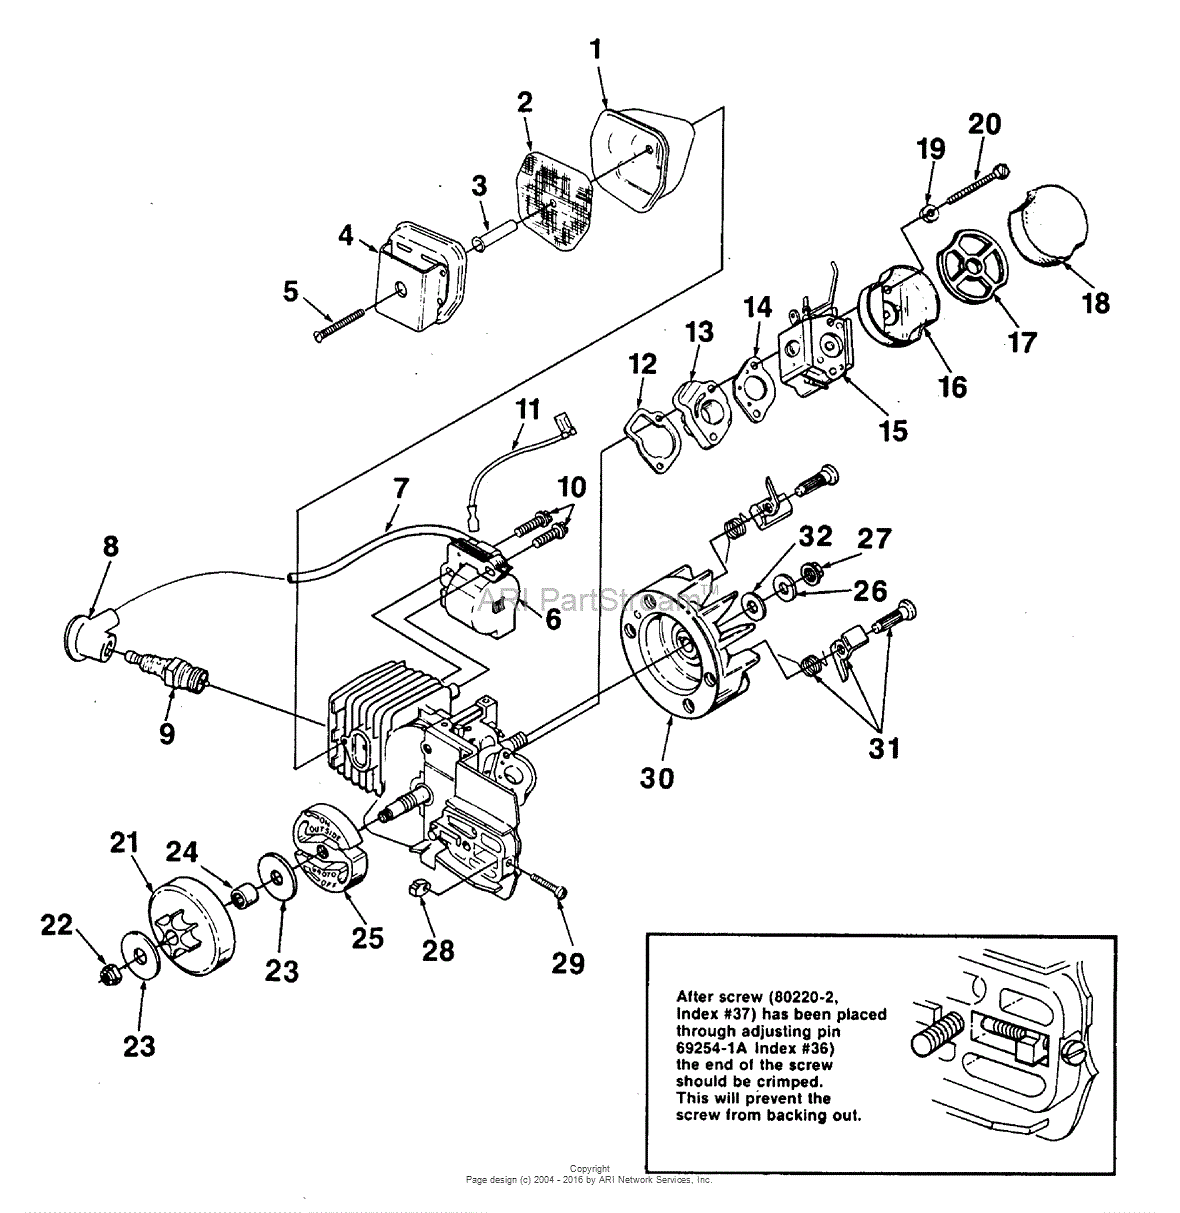 Super 2 Chain Saw UT-10653 Peripheral Engine Parts.